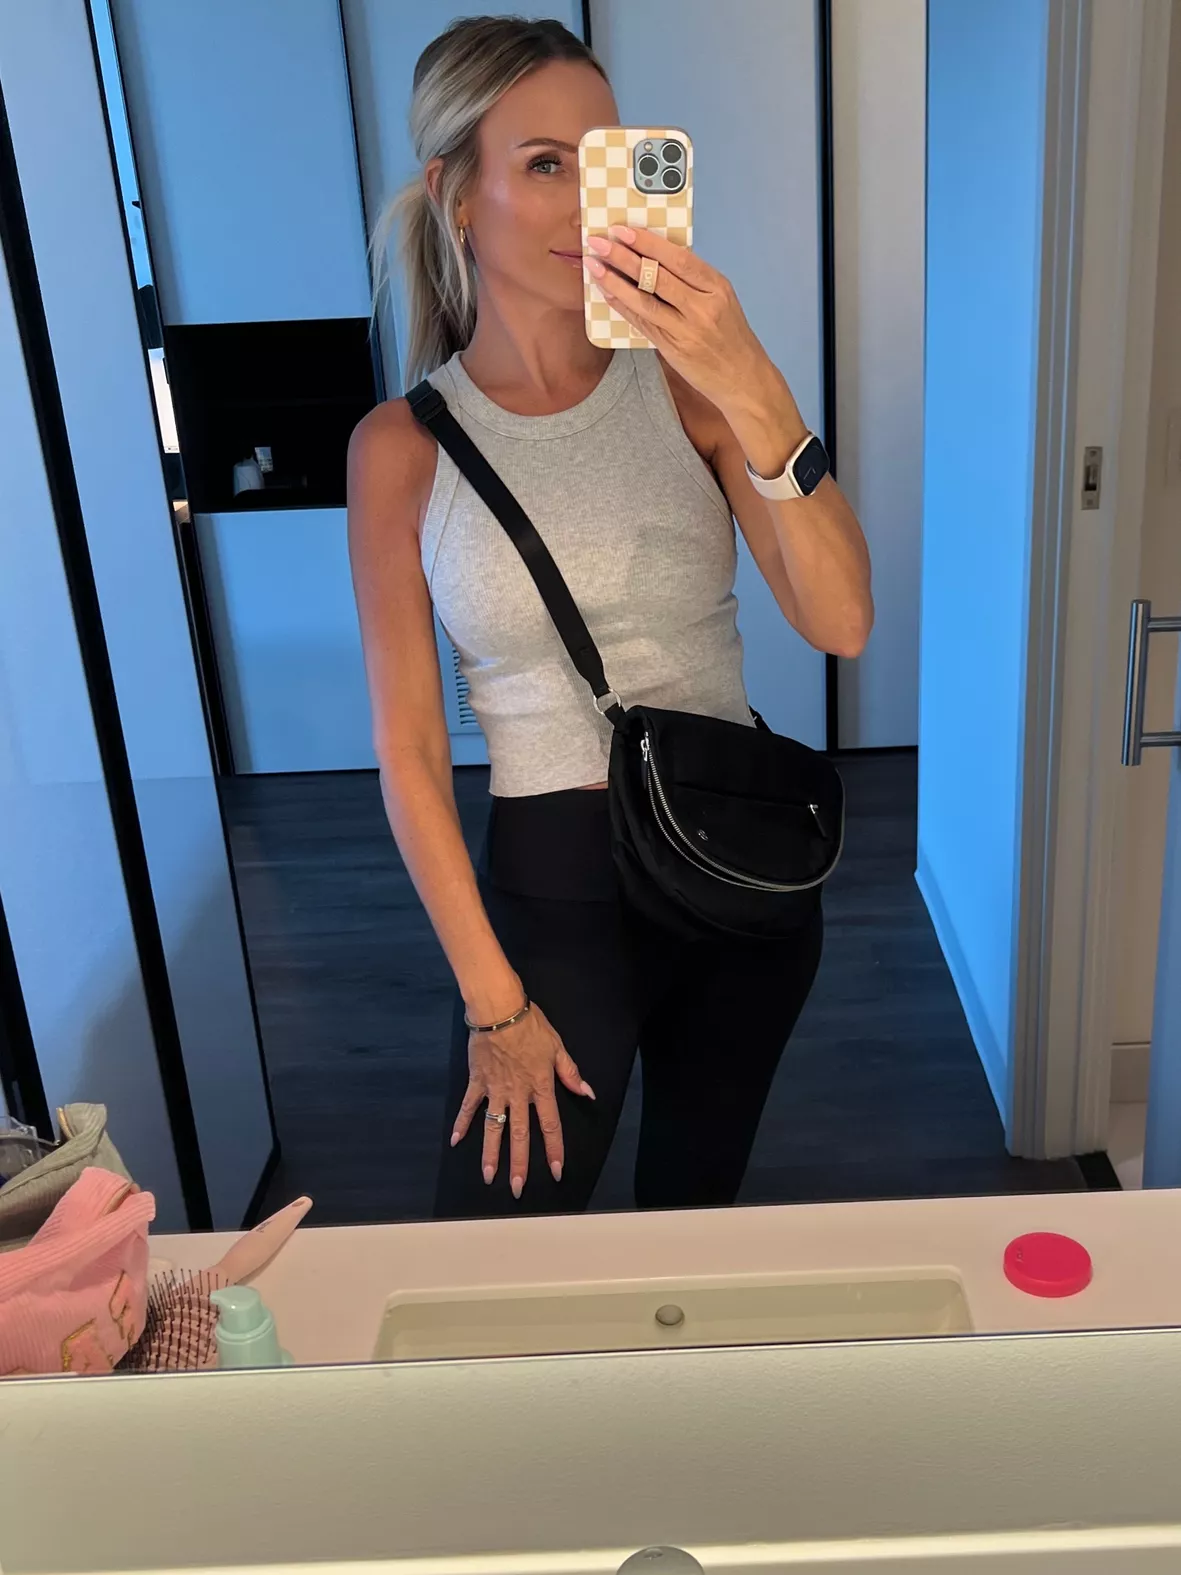 WYAQJLV Small Crossbody Bags for Women Luxury Wallet Vegan Leather Cell  Phone Purse Designer Shoulder Bag Purses